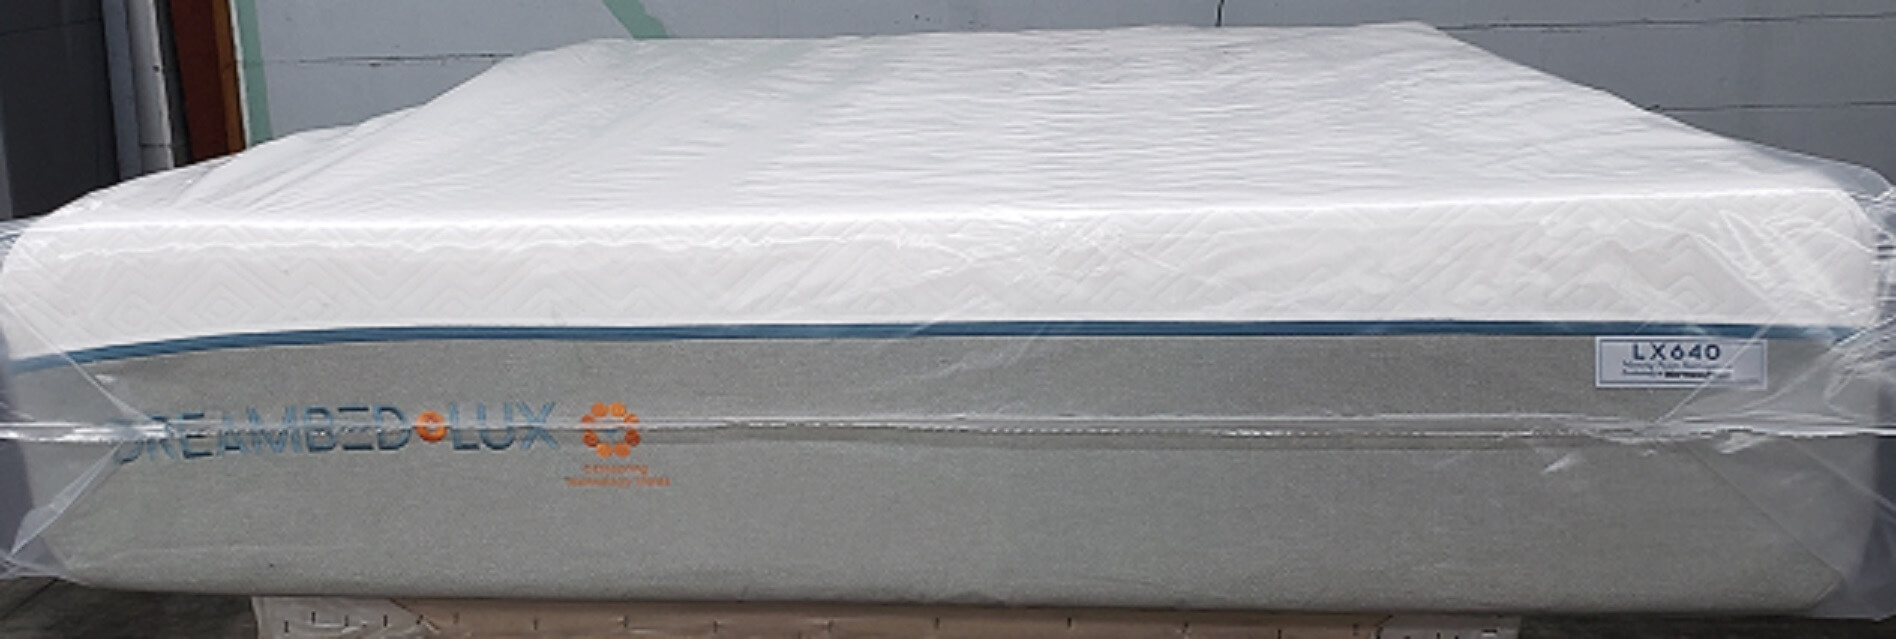 dream bed lux lx670 14 plush mattress